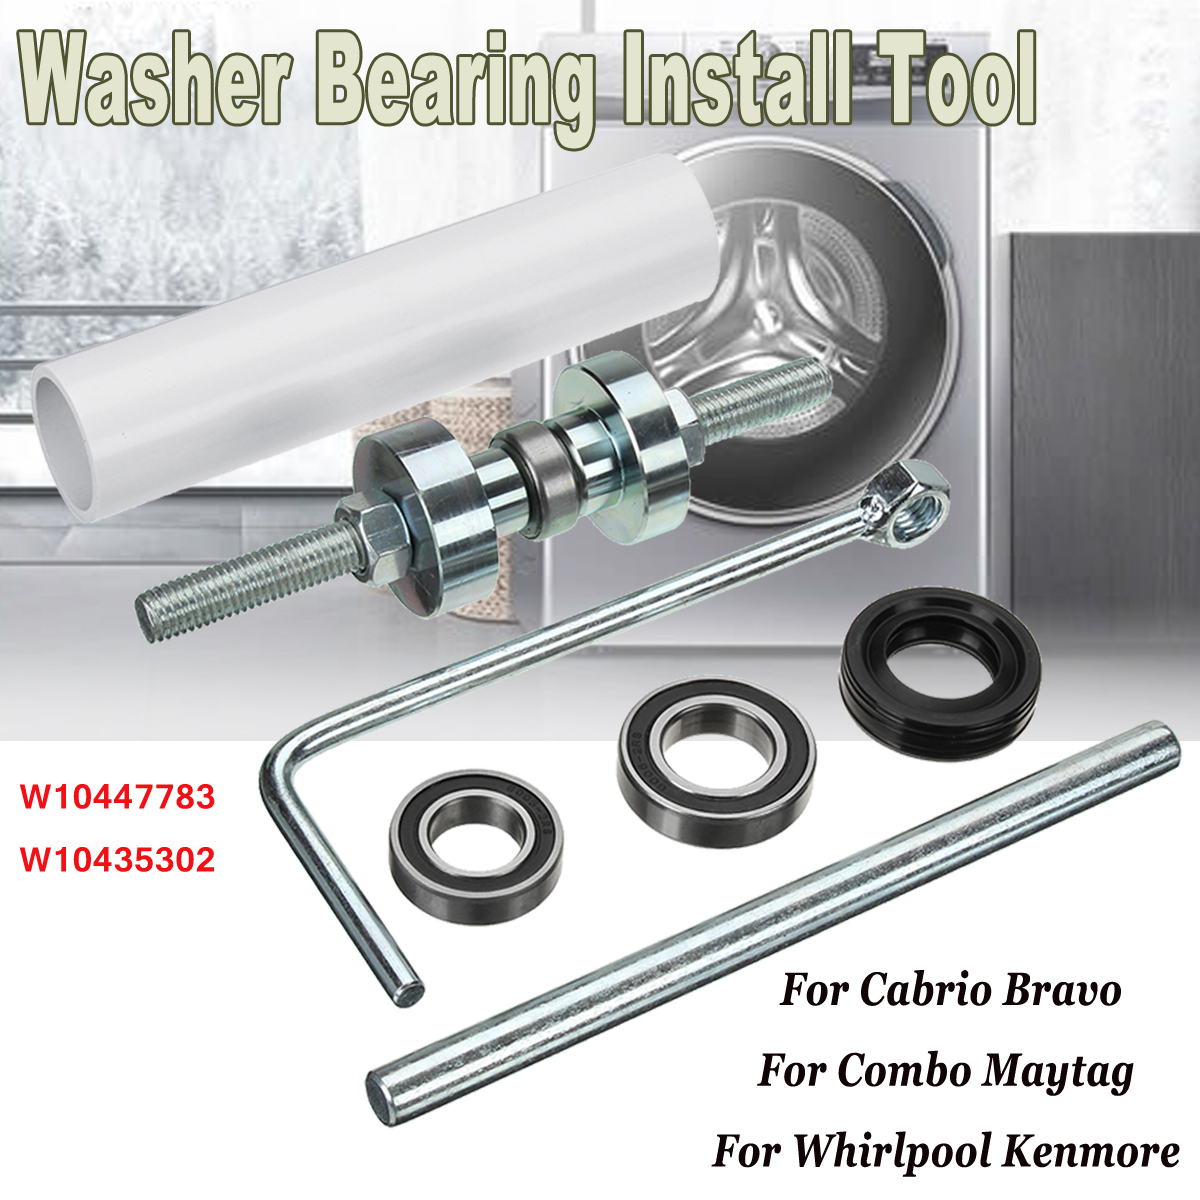 Washer-Bearing-Install-Tool-Fits-Whirlpool-Maytag-Cabrio-Bravo-W10447783-W10435302-1348780